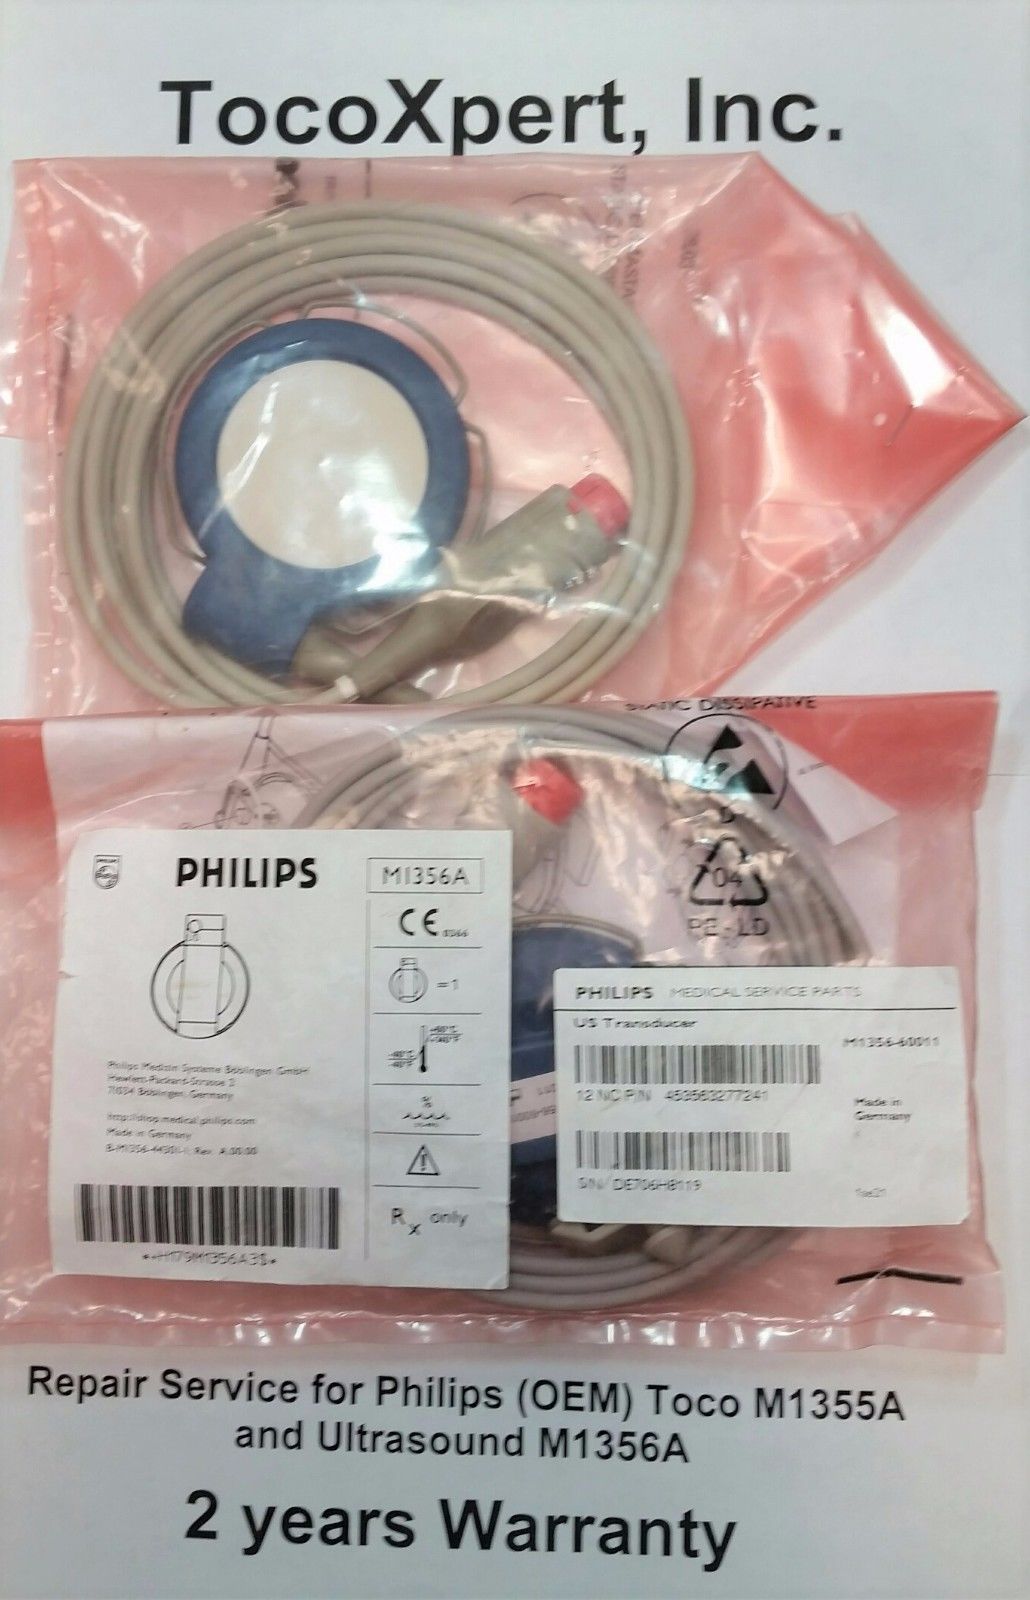 HP Philips M1356A Ultrasound Transducer $249 - LIFETIME Warranty! 100% ORIGINAL 192243004454